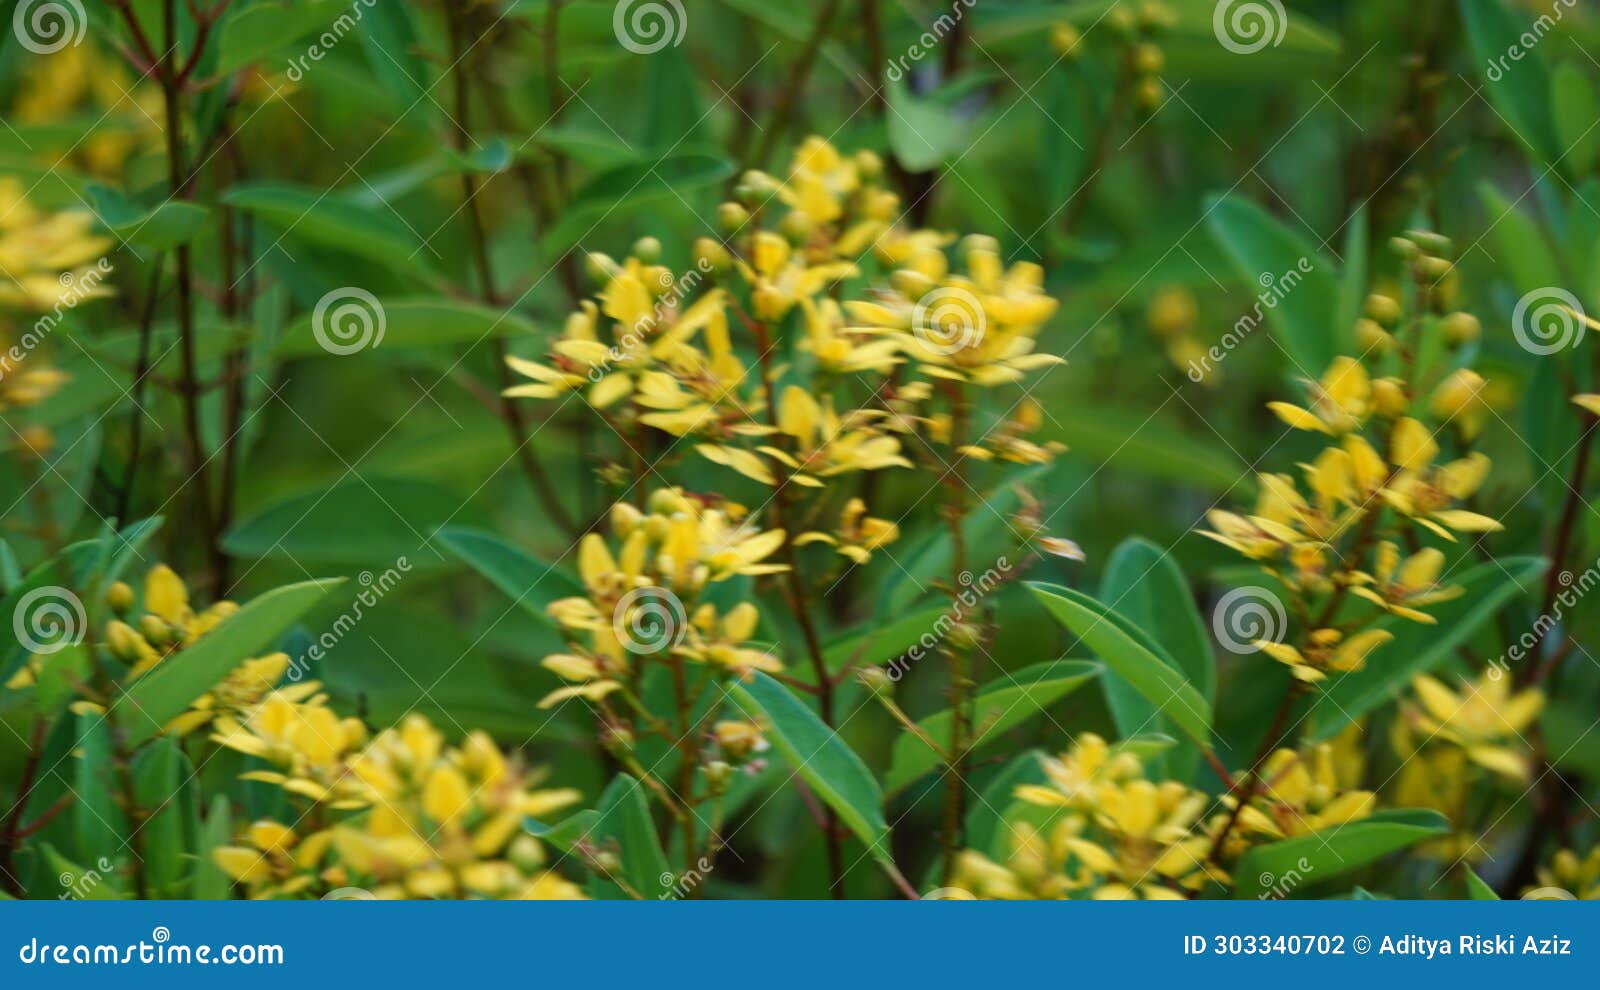 galphimia glauca (also called hujan mas, noche buena, gold shower thryallis, noche buena, rain of gold) flower